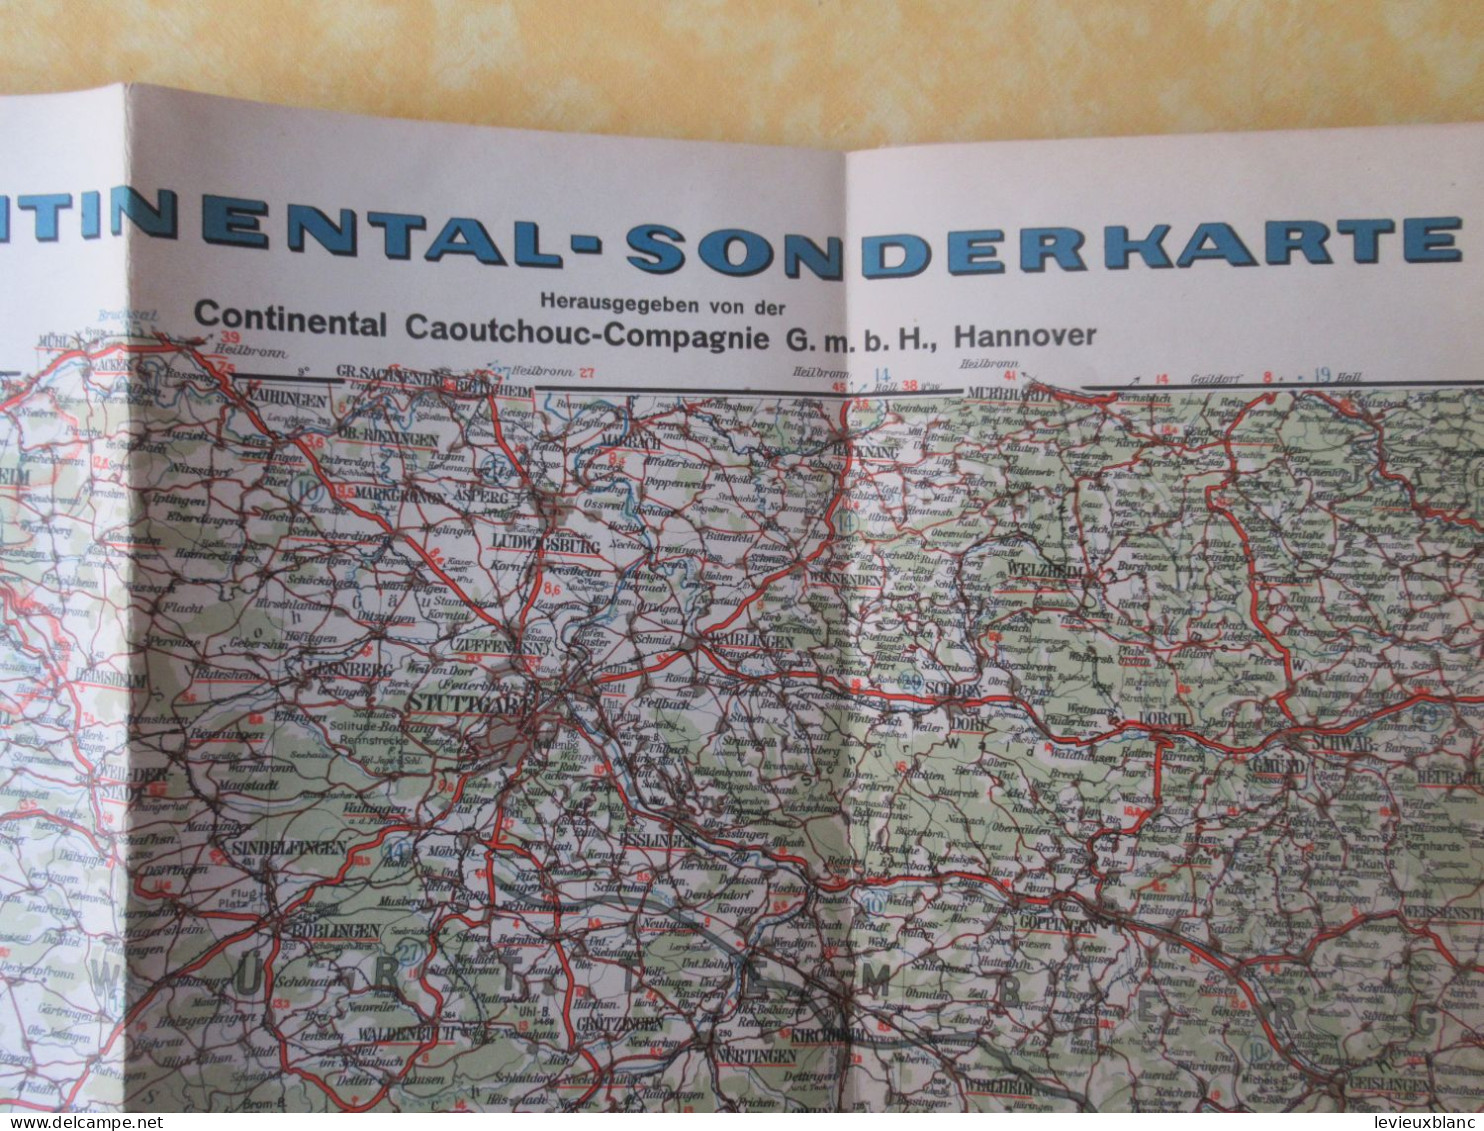 Carte routière ancienne Allemande /CONTINENTAL Sonderkarte/ Schwarzwald-Bodensee /Vers 1935-1945       PGC561